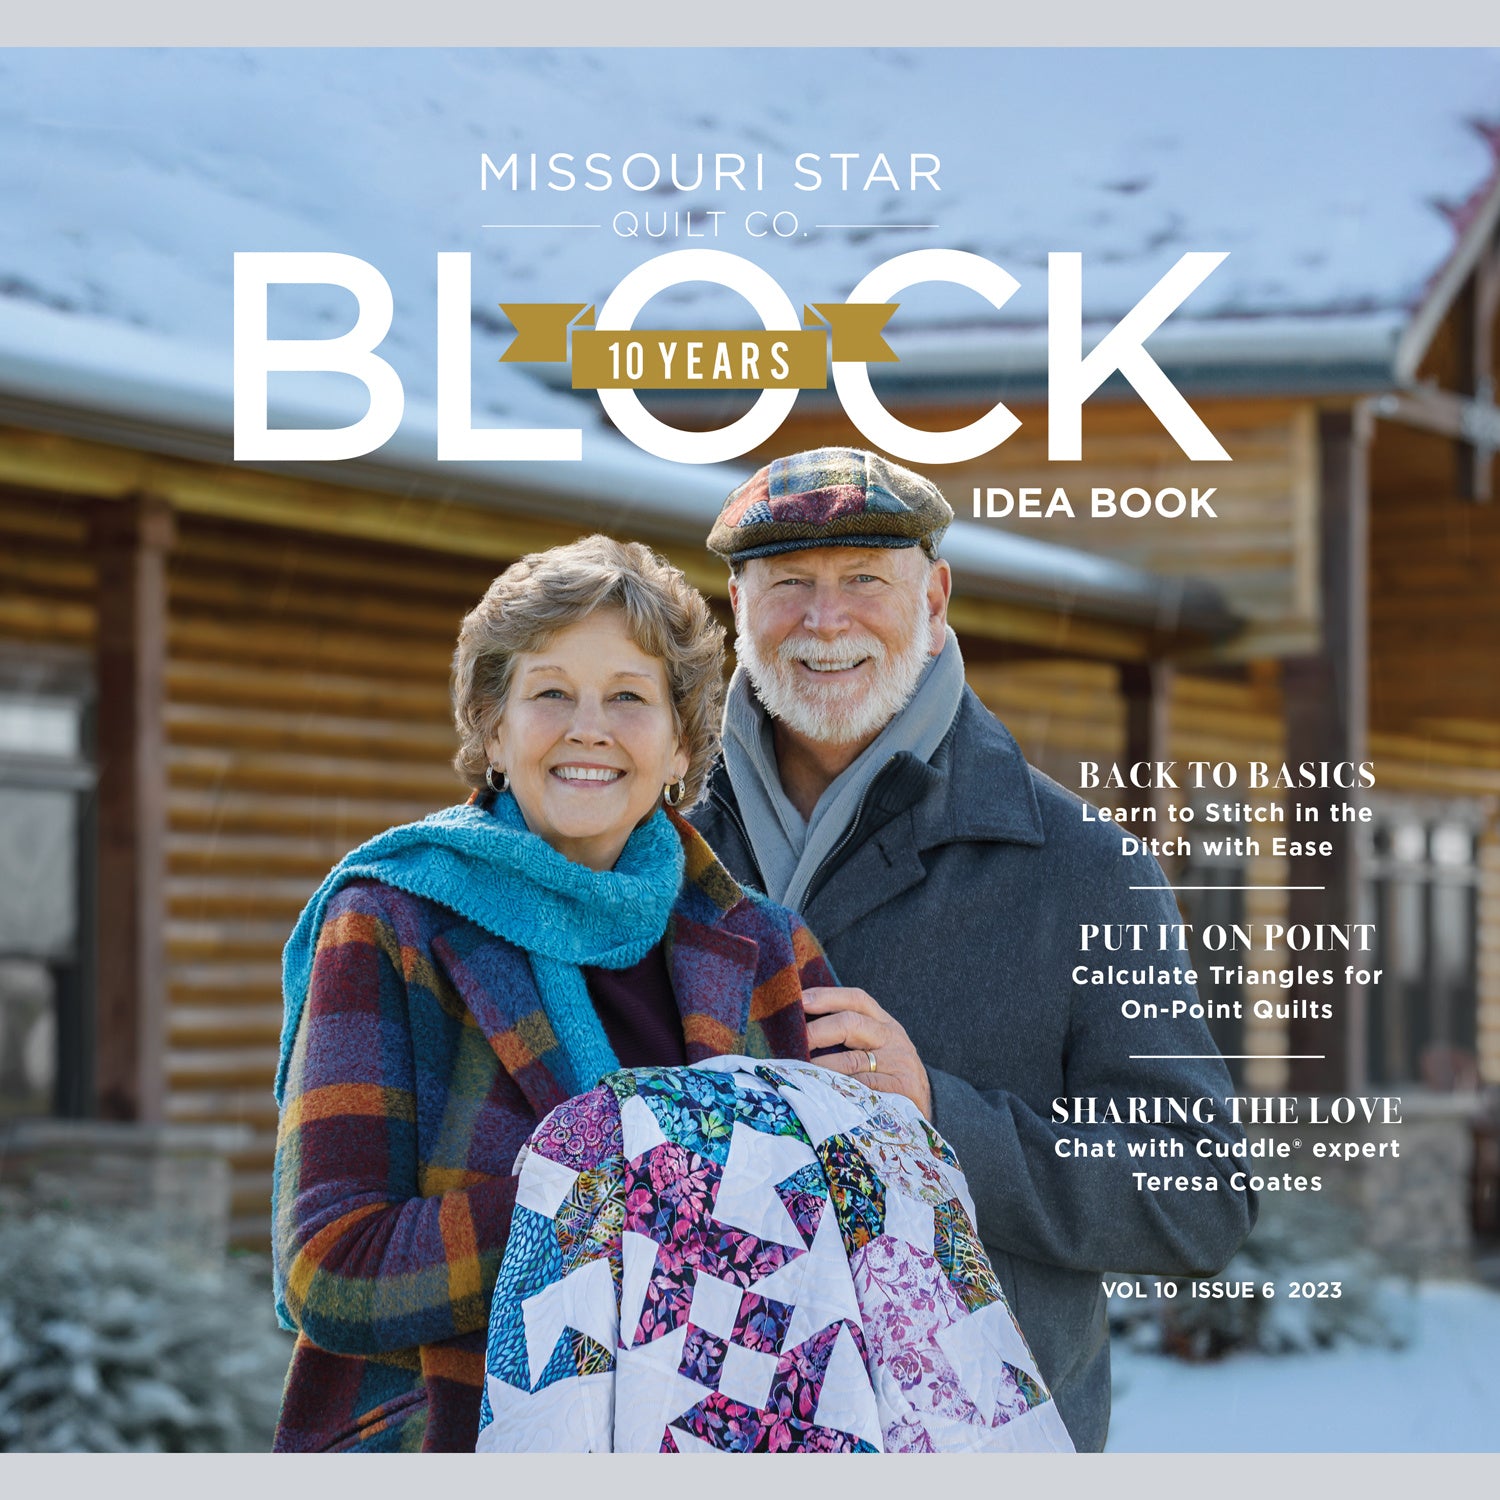 Missouri Star Iron-On Patchwork Quilt Blocks - 5 x 5 Bright 20pk Contemporary | Missouri Star Quilt Co.